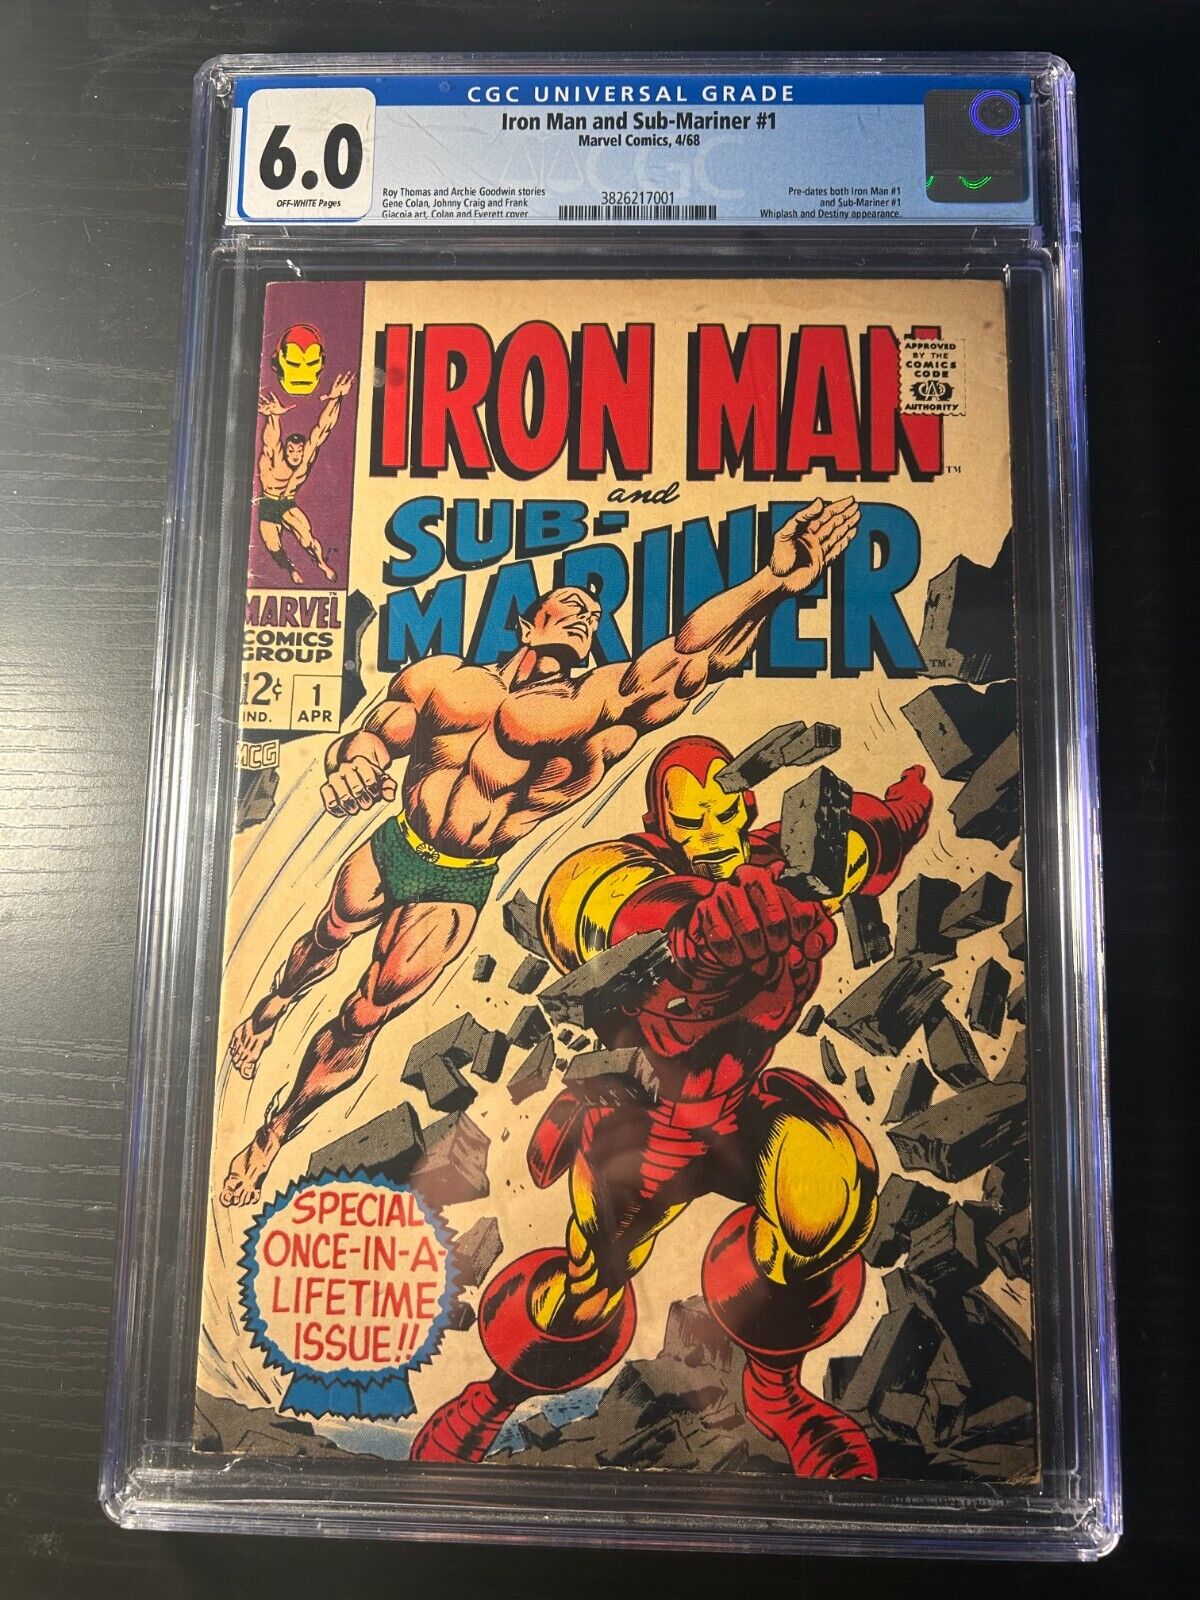 Iron Man and Sub-Mariner #1 (1968) Marvel Comics (CGC Graded: 6.0)